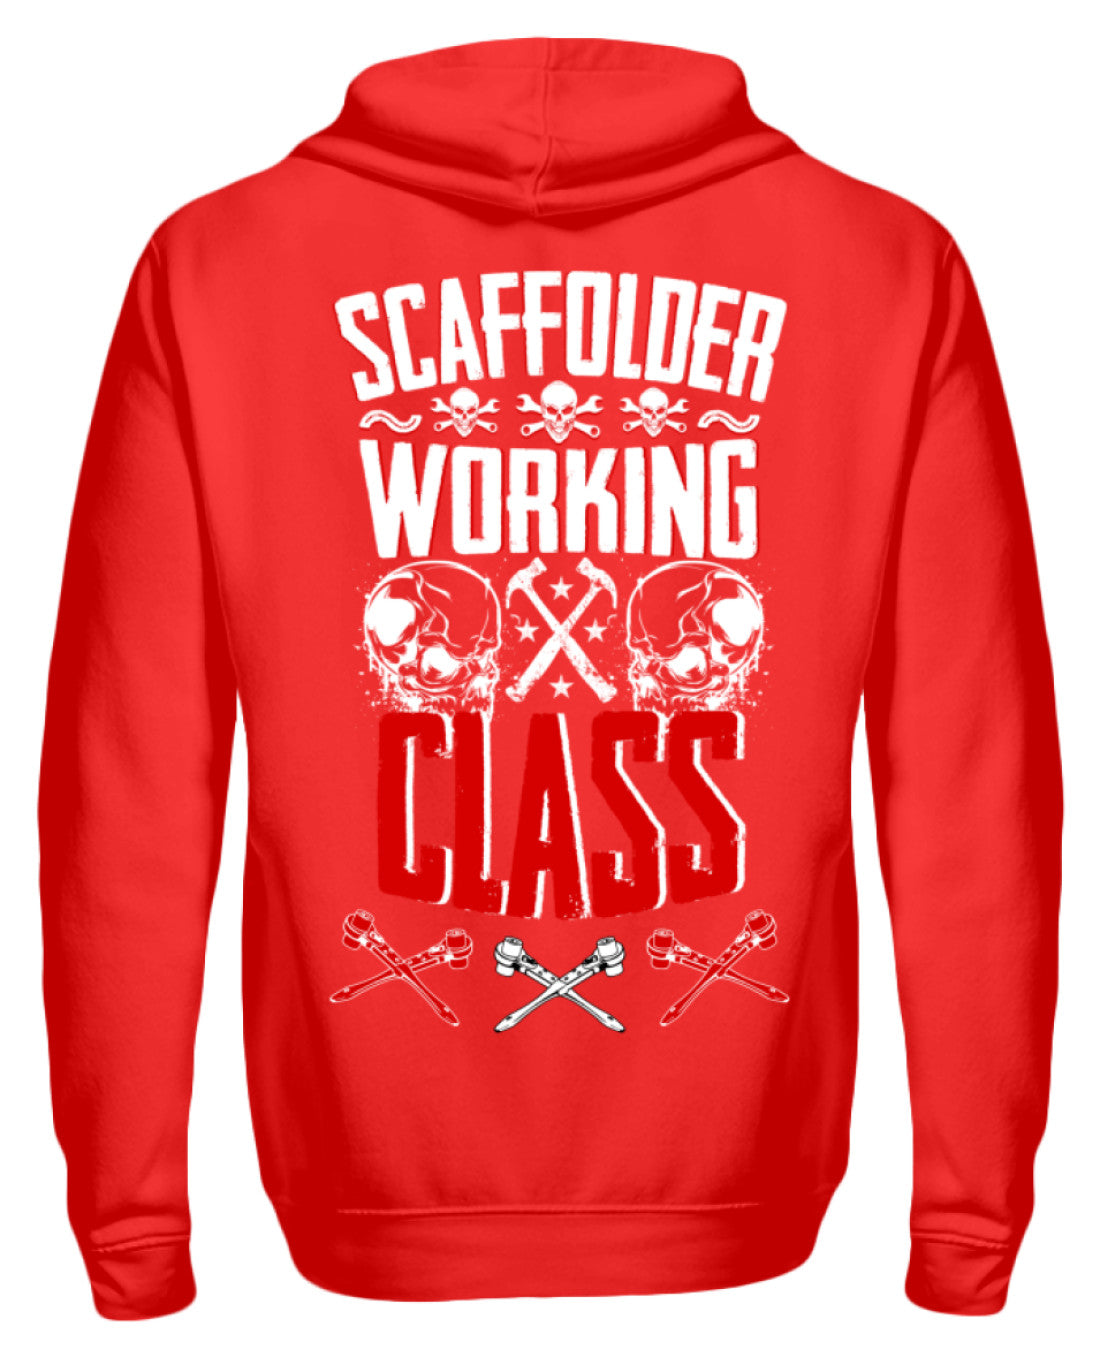 SCAFFOLDER / WORKING CLASS €44.95 Gerüstbauer - Shop >>